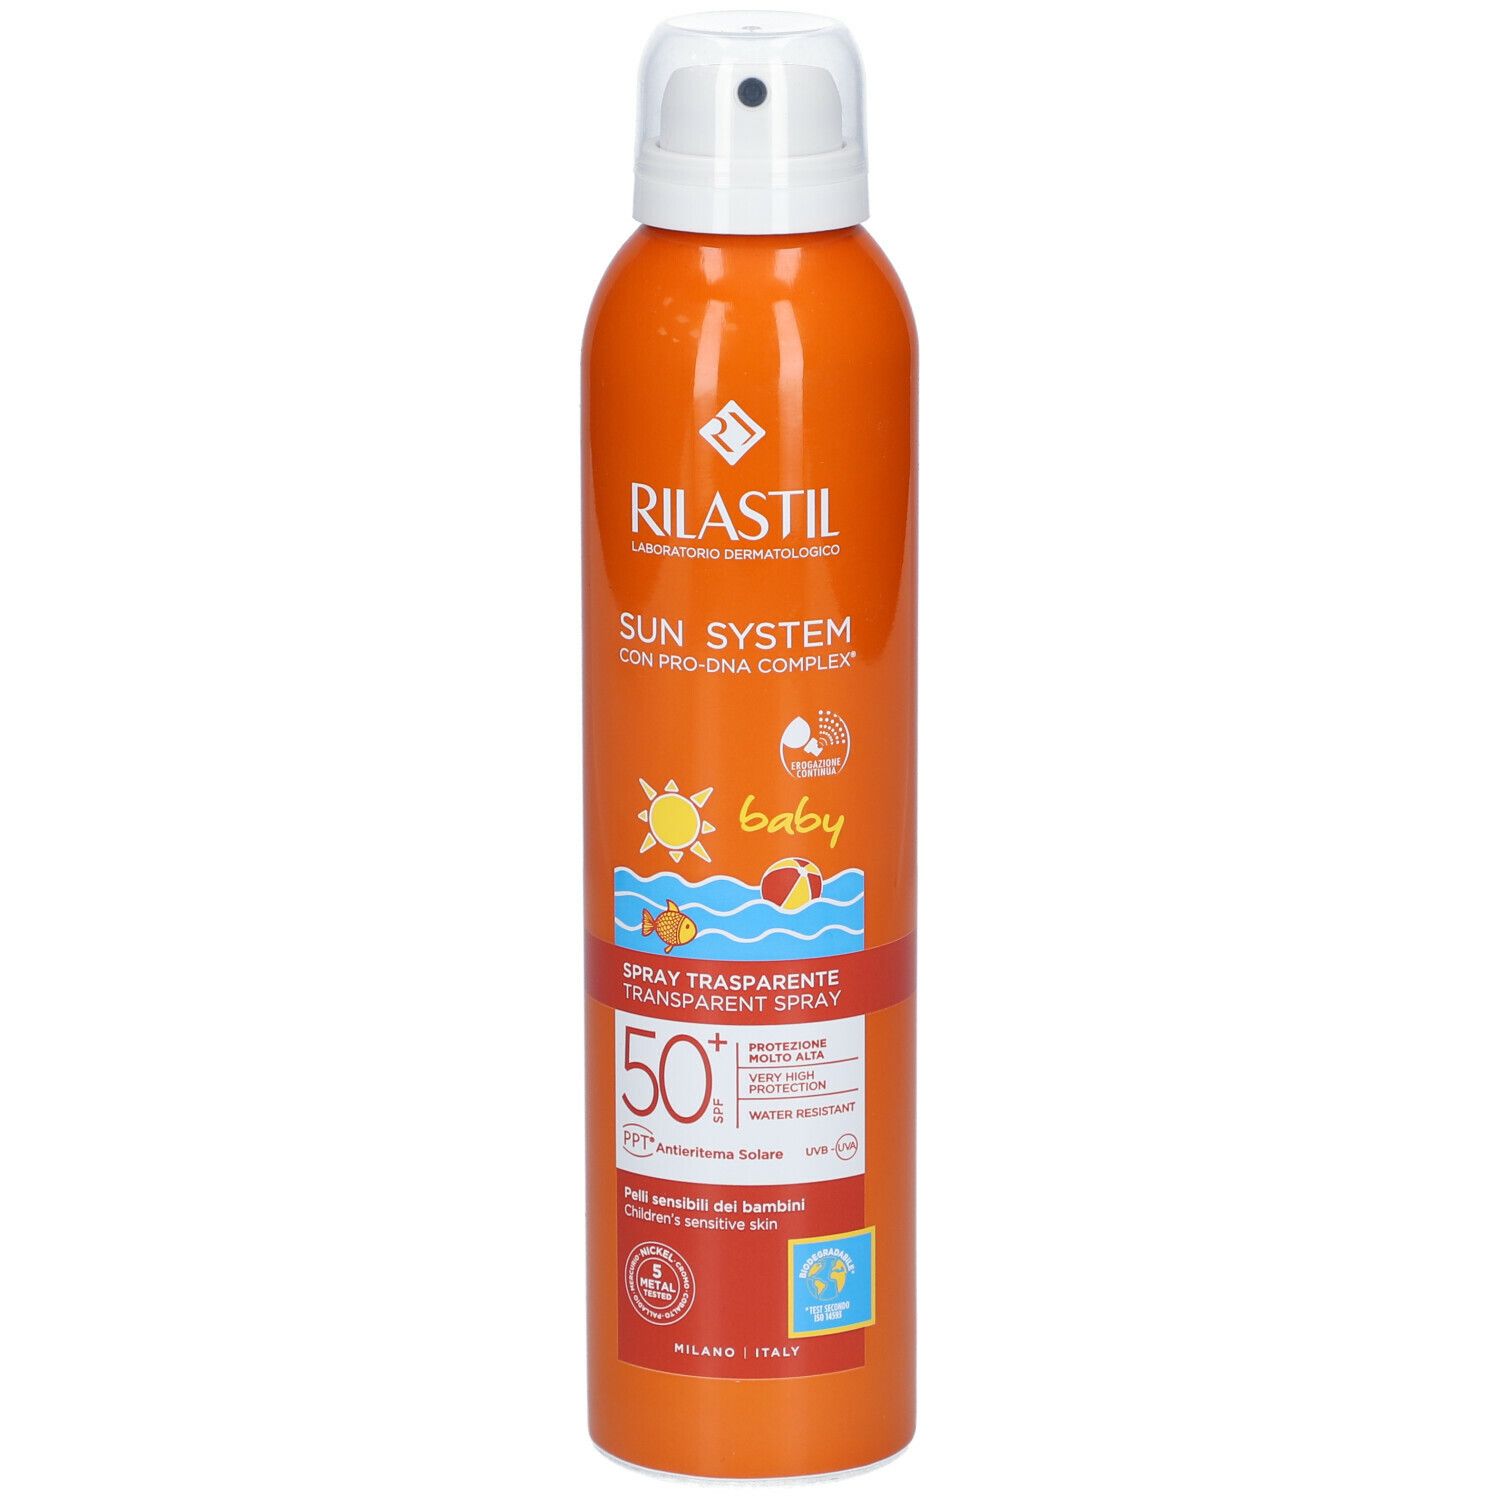 RILASTIL® Sun System Baby Spray Transparent SPF 50+